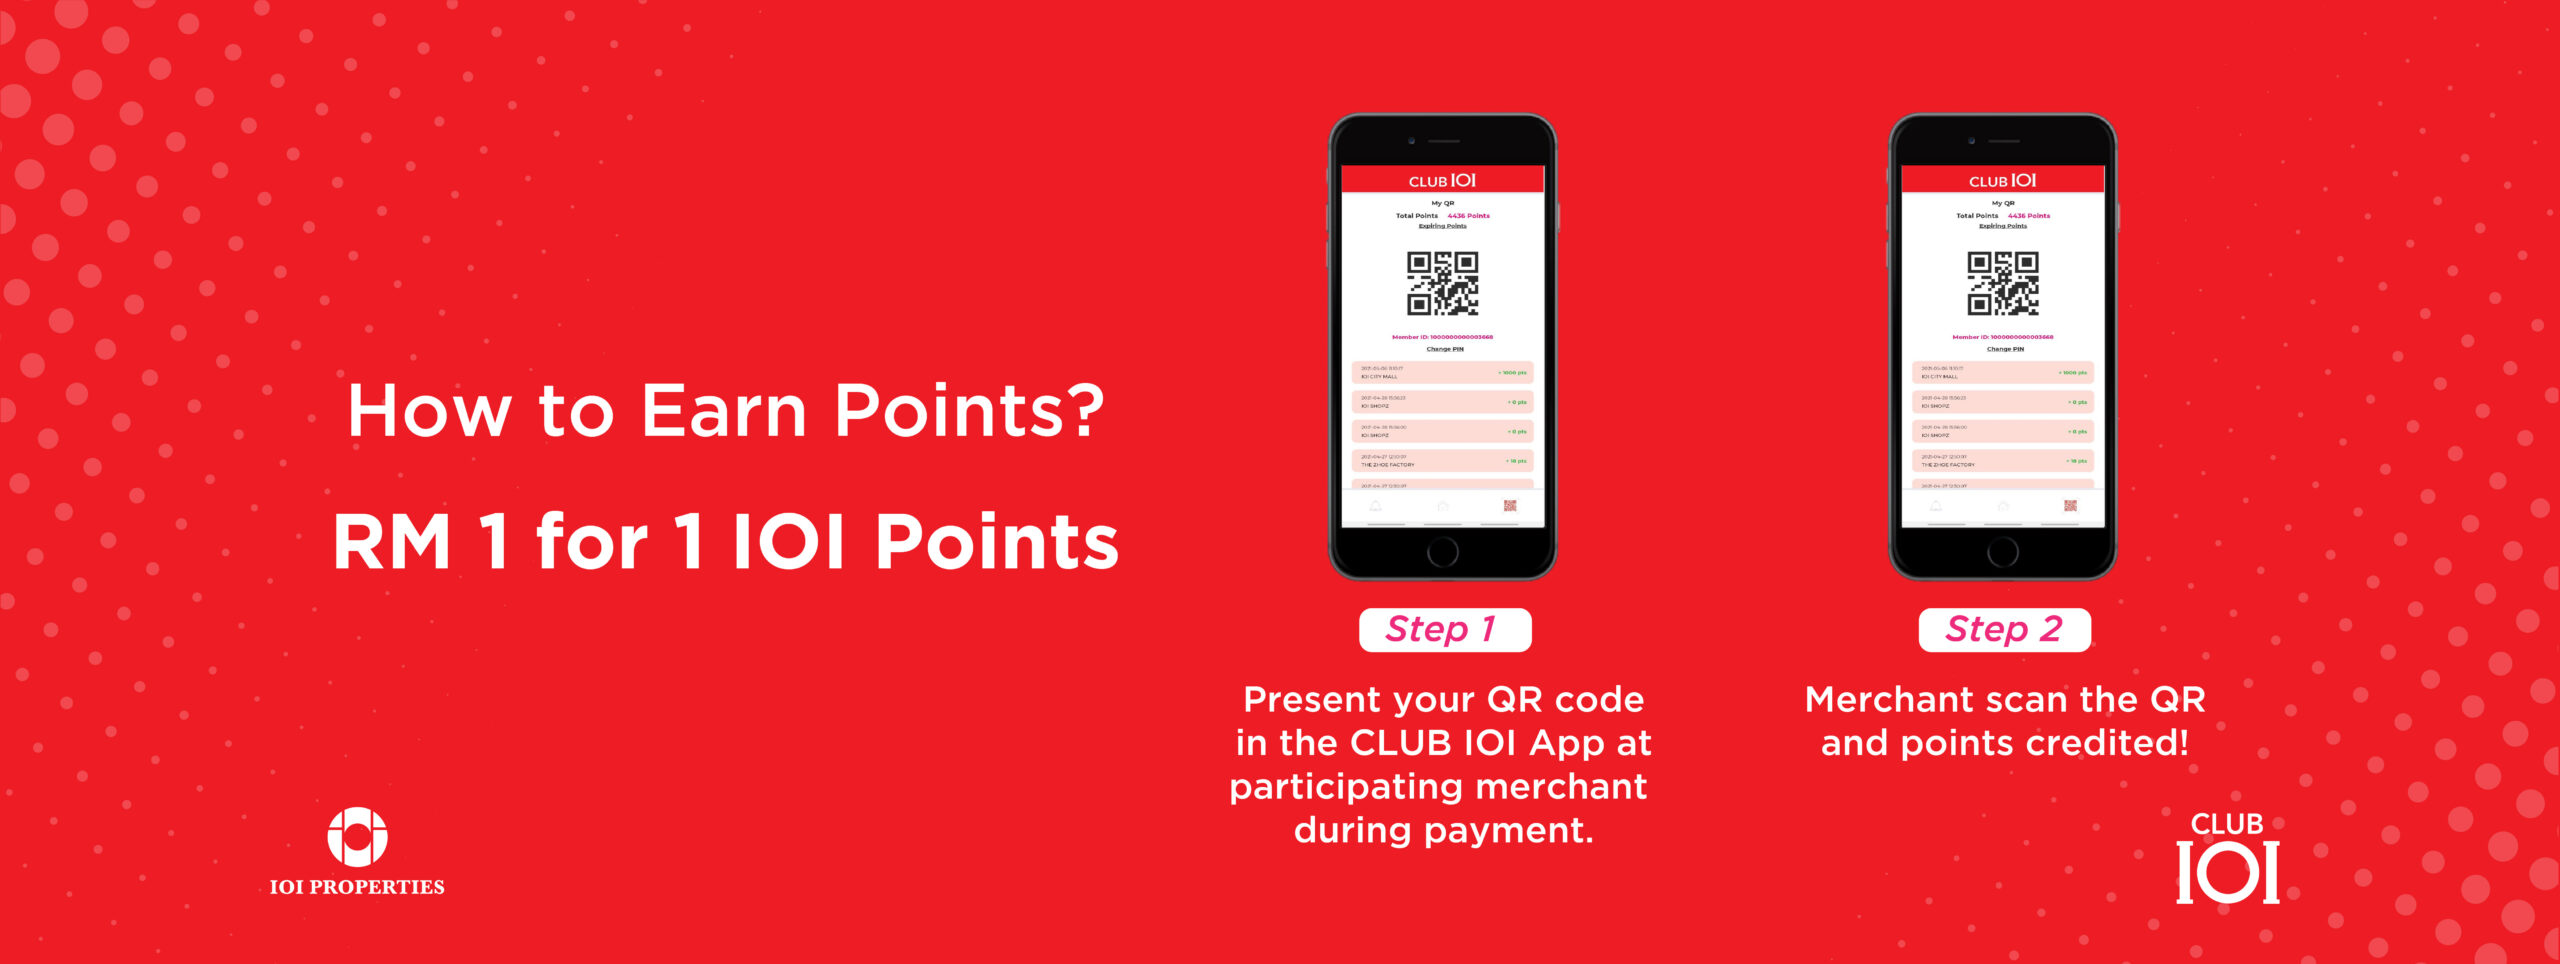 Club IOI - Earn Points